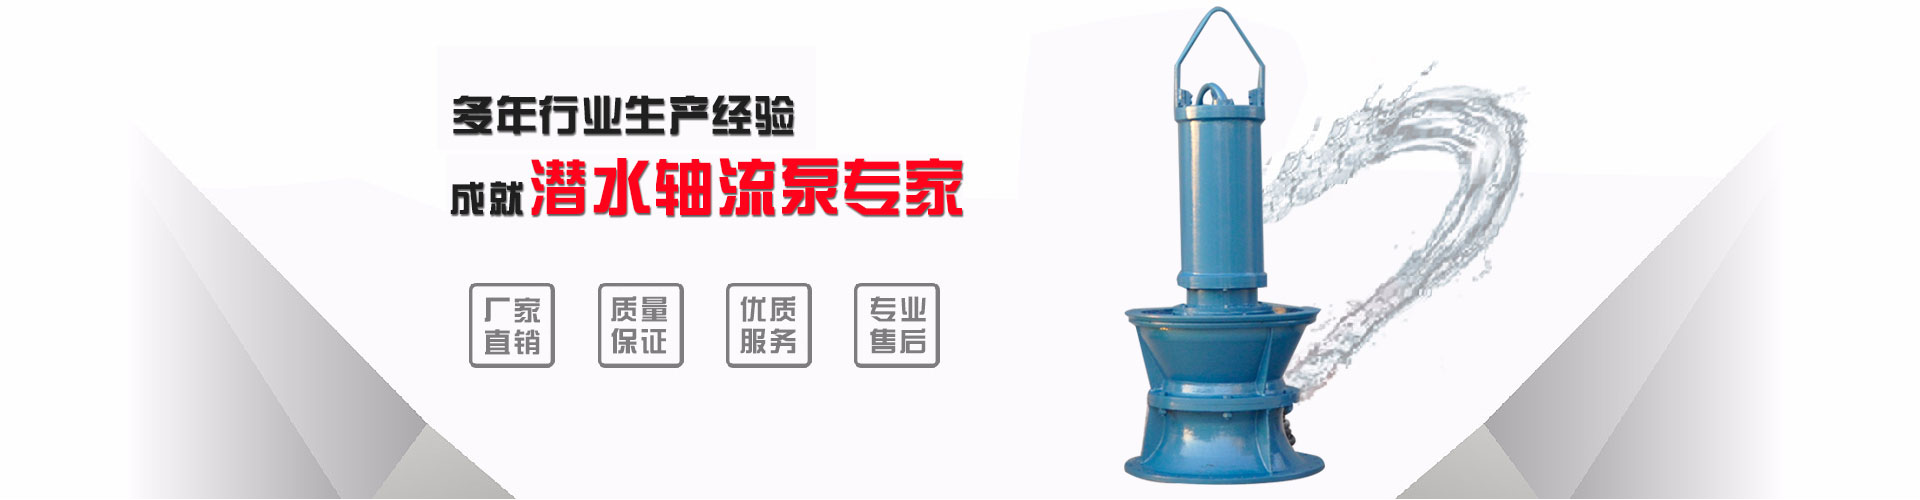 6kv浮筒泵工业_海西浮筒泵